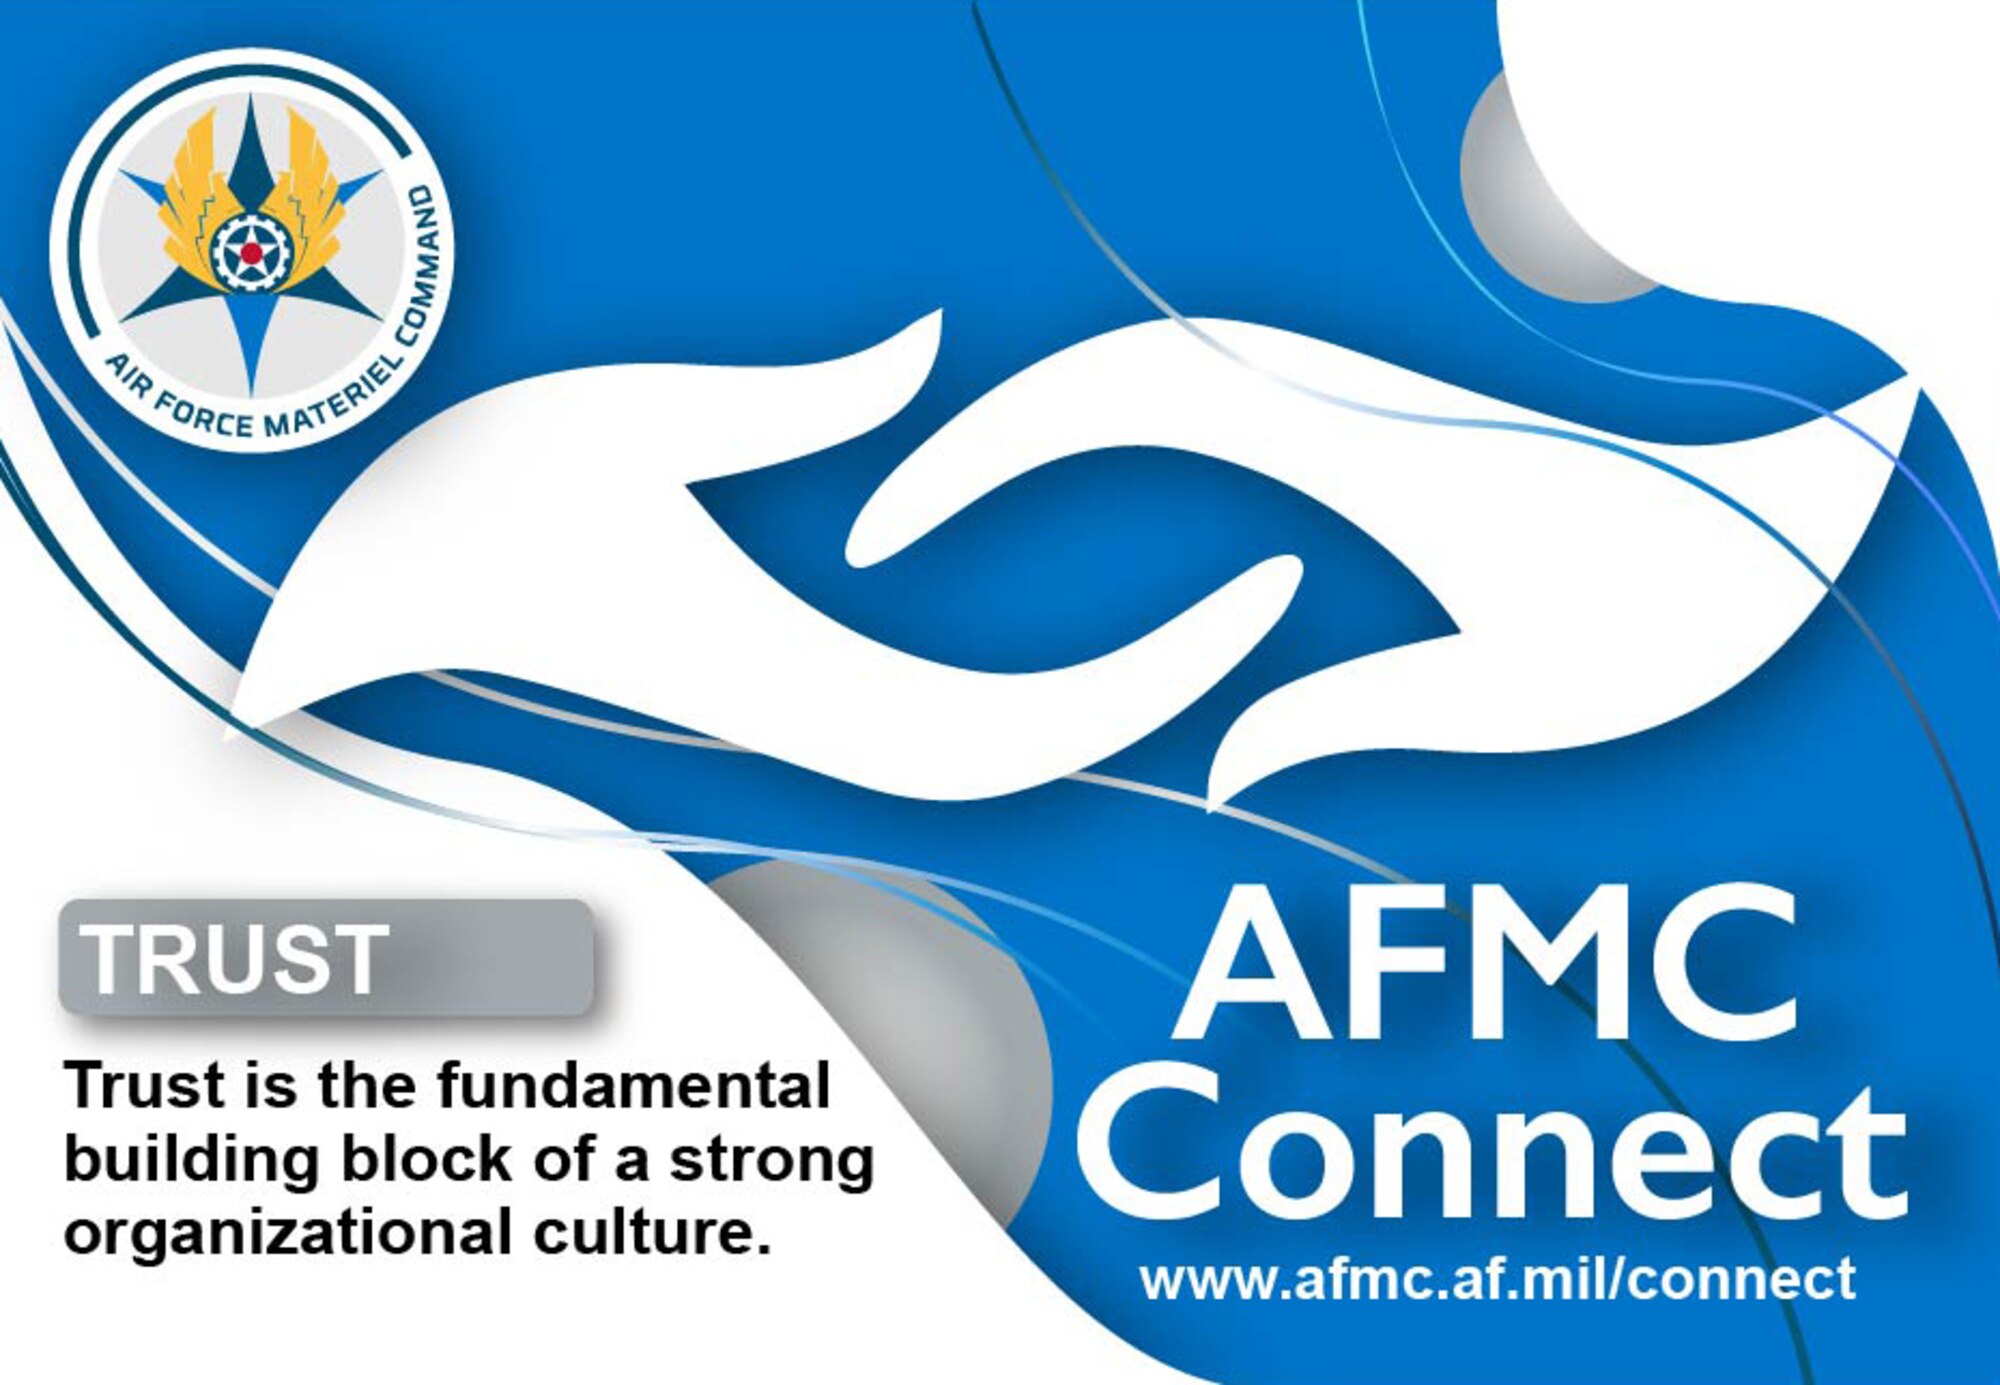 AFMC Connect: TRUST